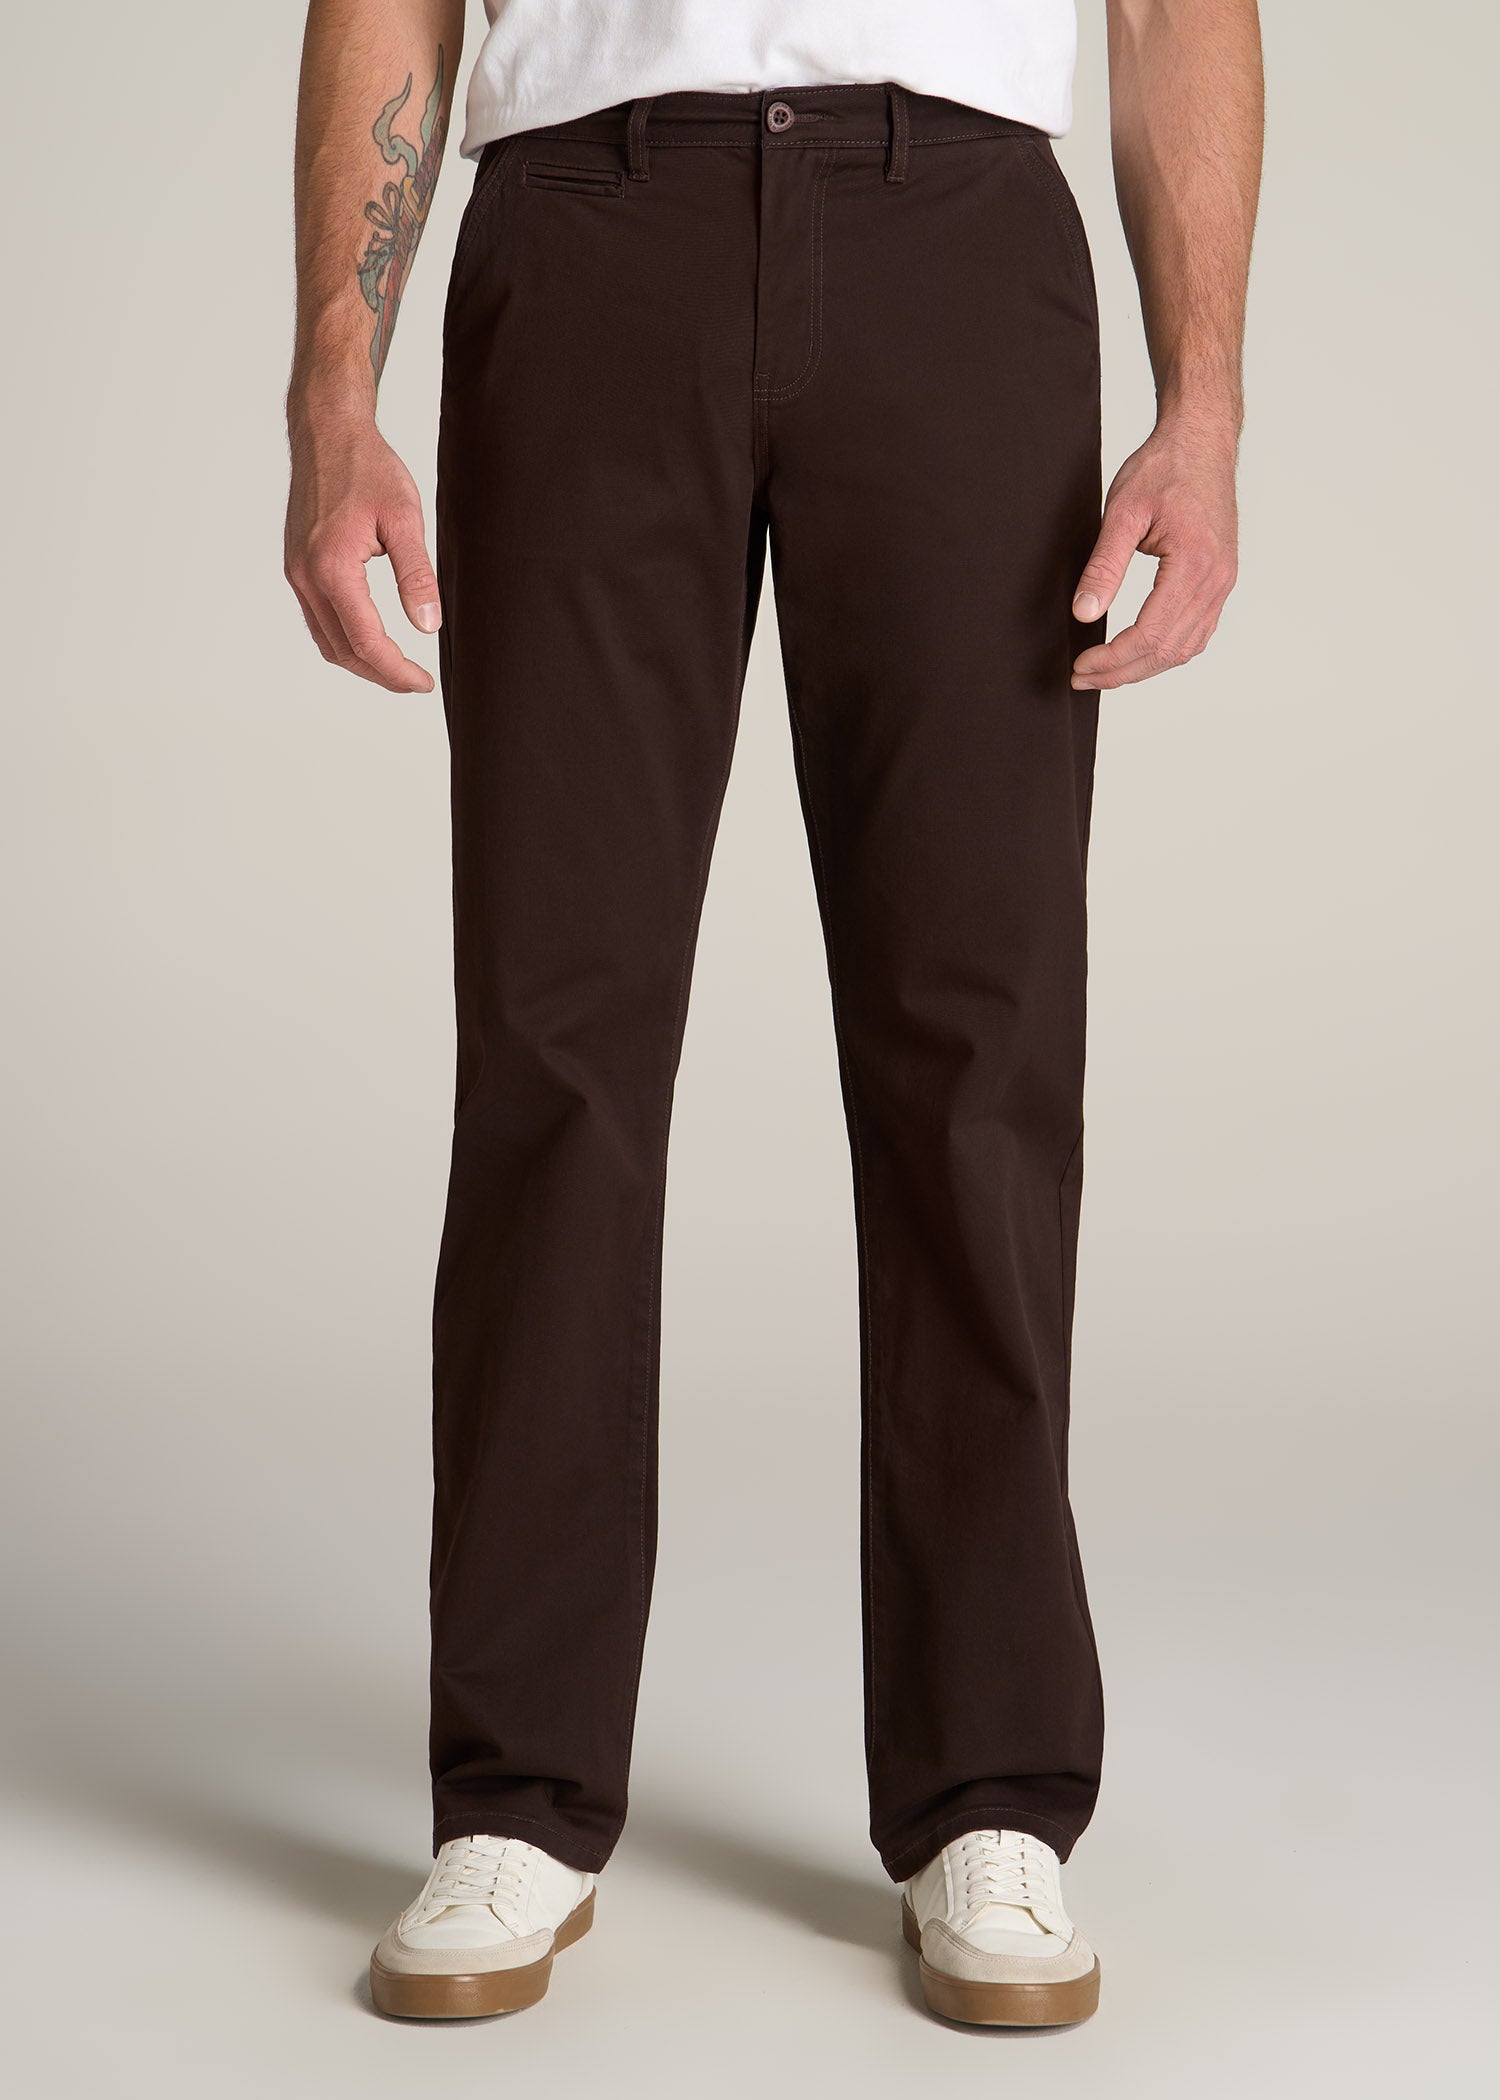 SLIM FIT Pants - Ready to Wear